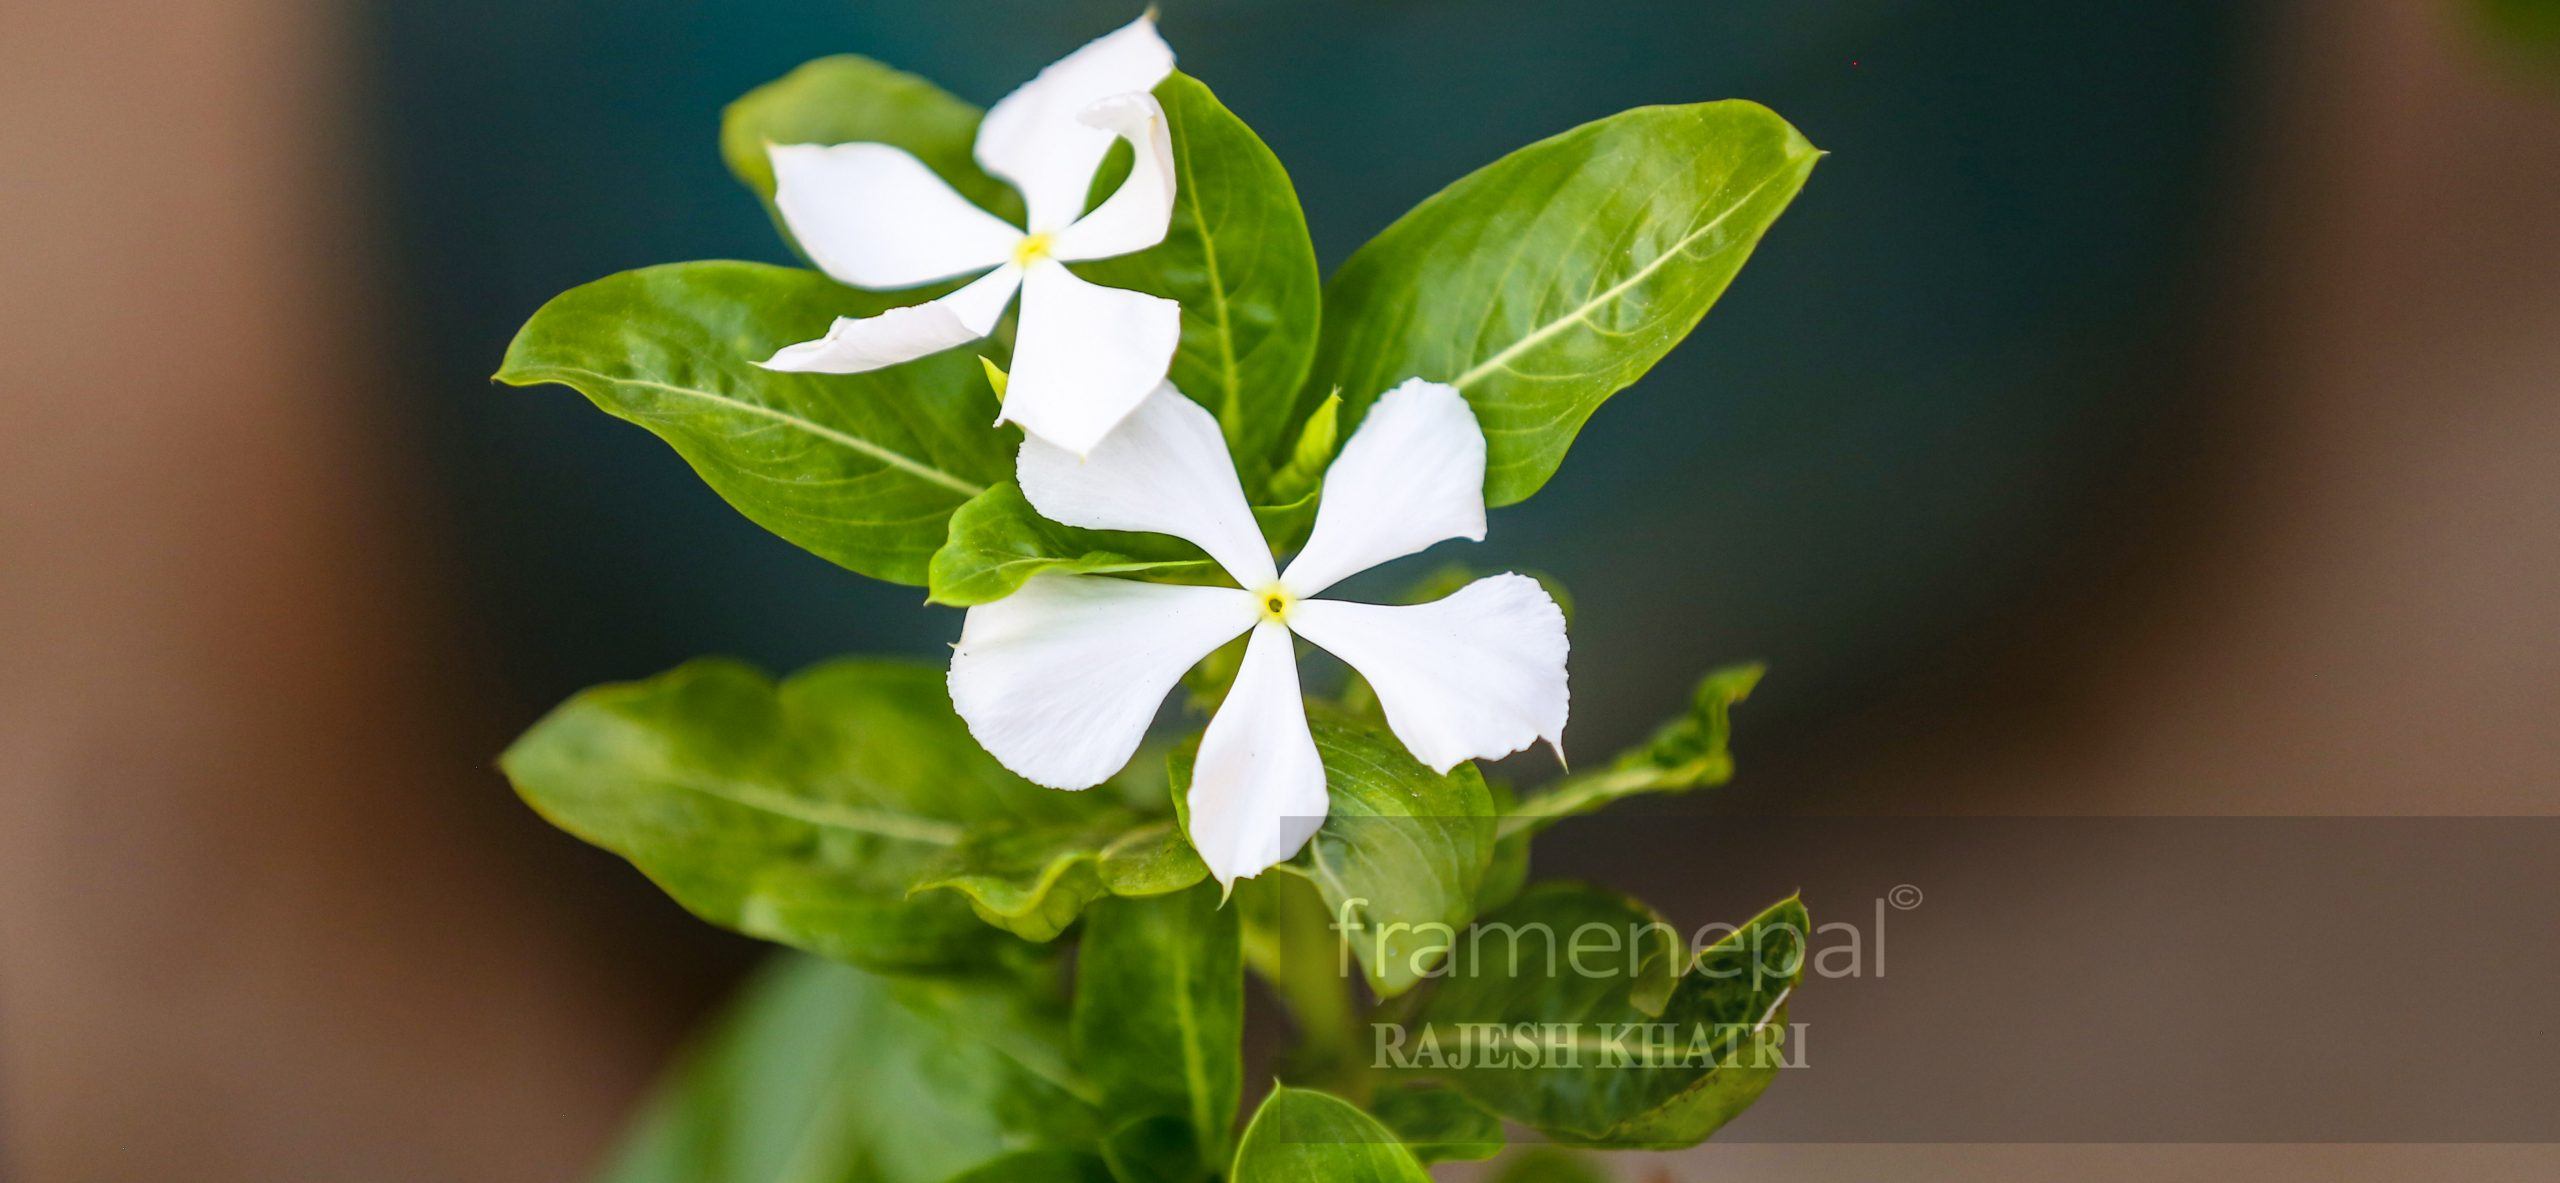 Best Nepali flower, Beautiful Flowers Images, Images Wallpapers, HD Image »  Frame Nepal Frame Nepal